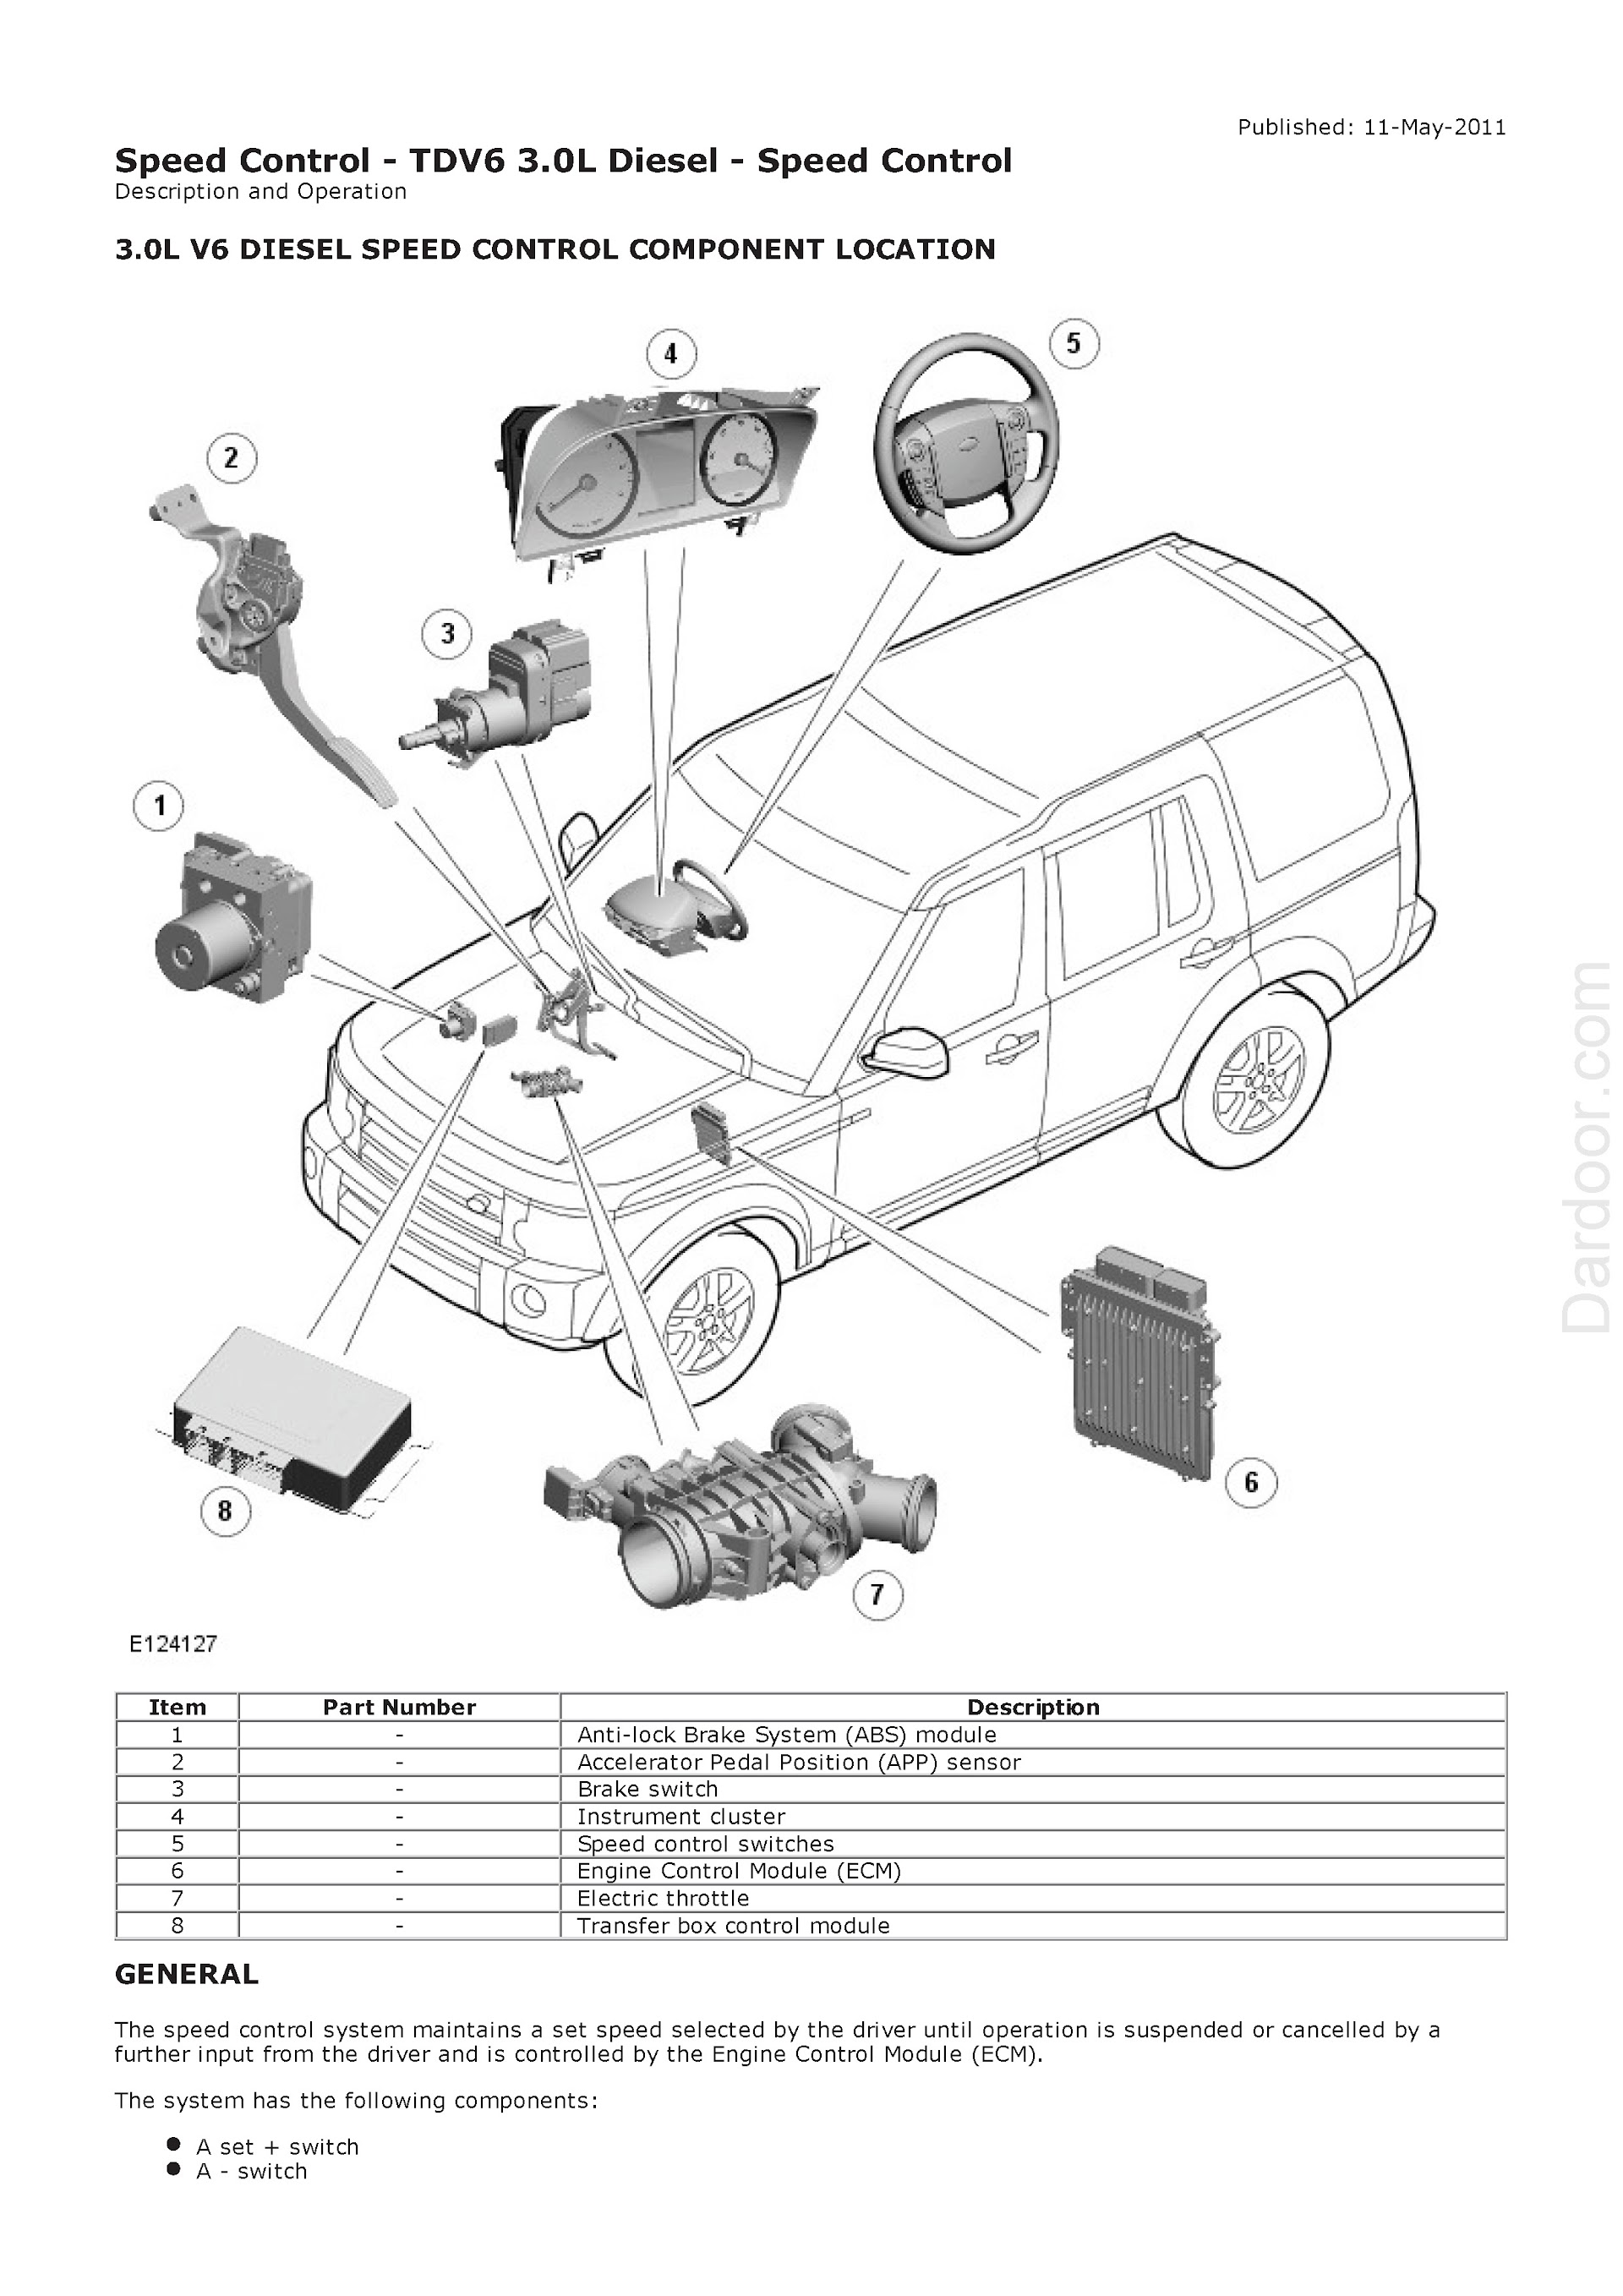 2009-2011 Land Rover Discovery 4 Repair Manual, TDV 6 3.0L Diesel - Speed Control